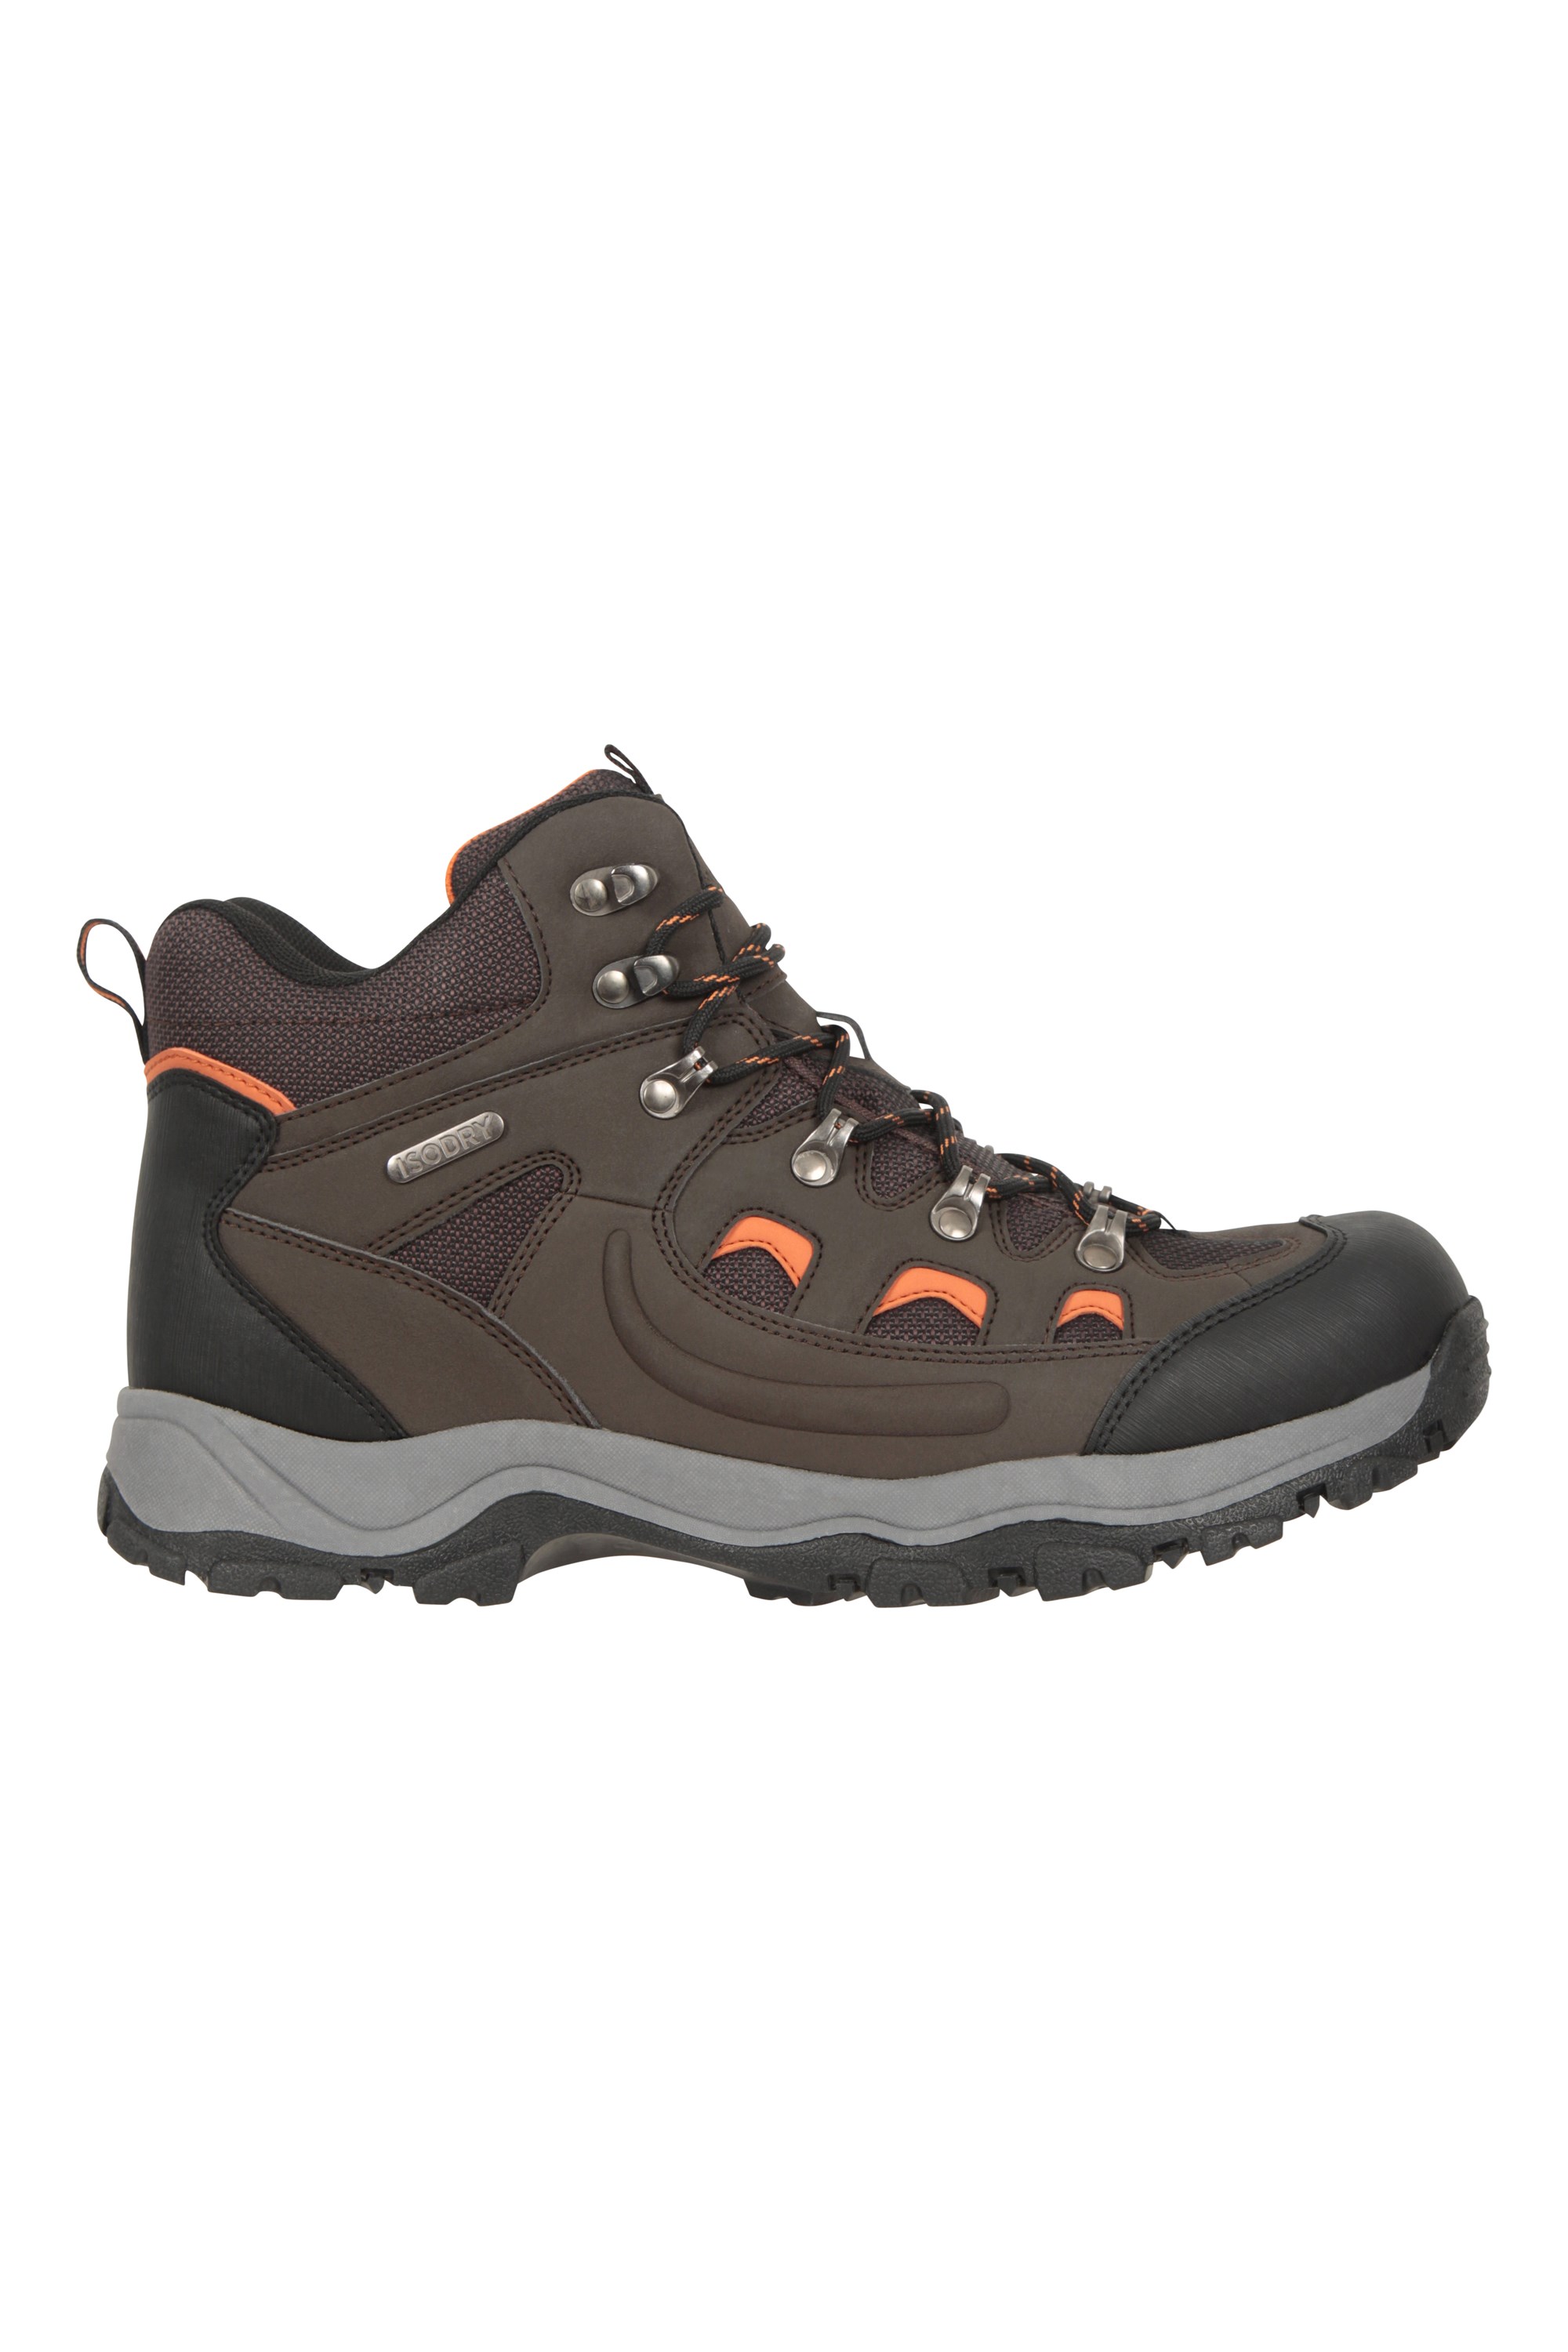 Adventurer Mens Waterproof Hiking Boots - Brown